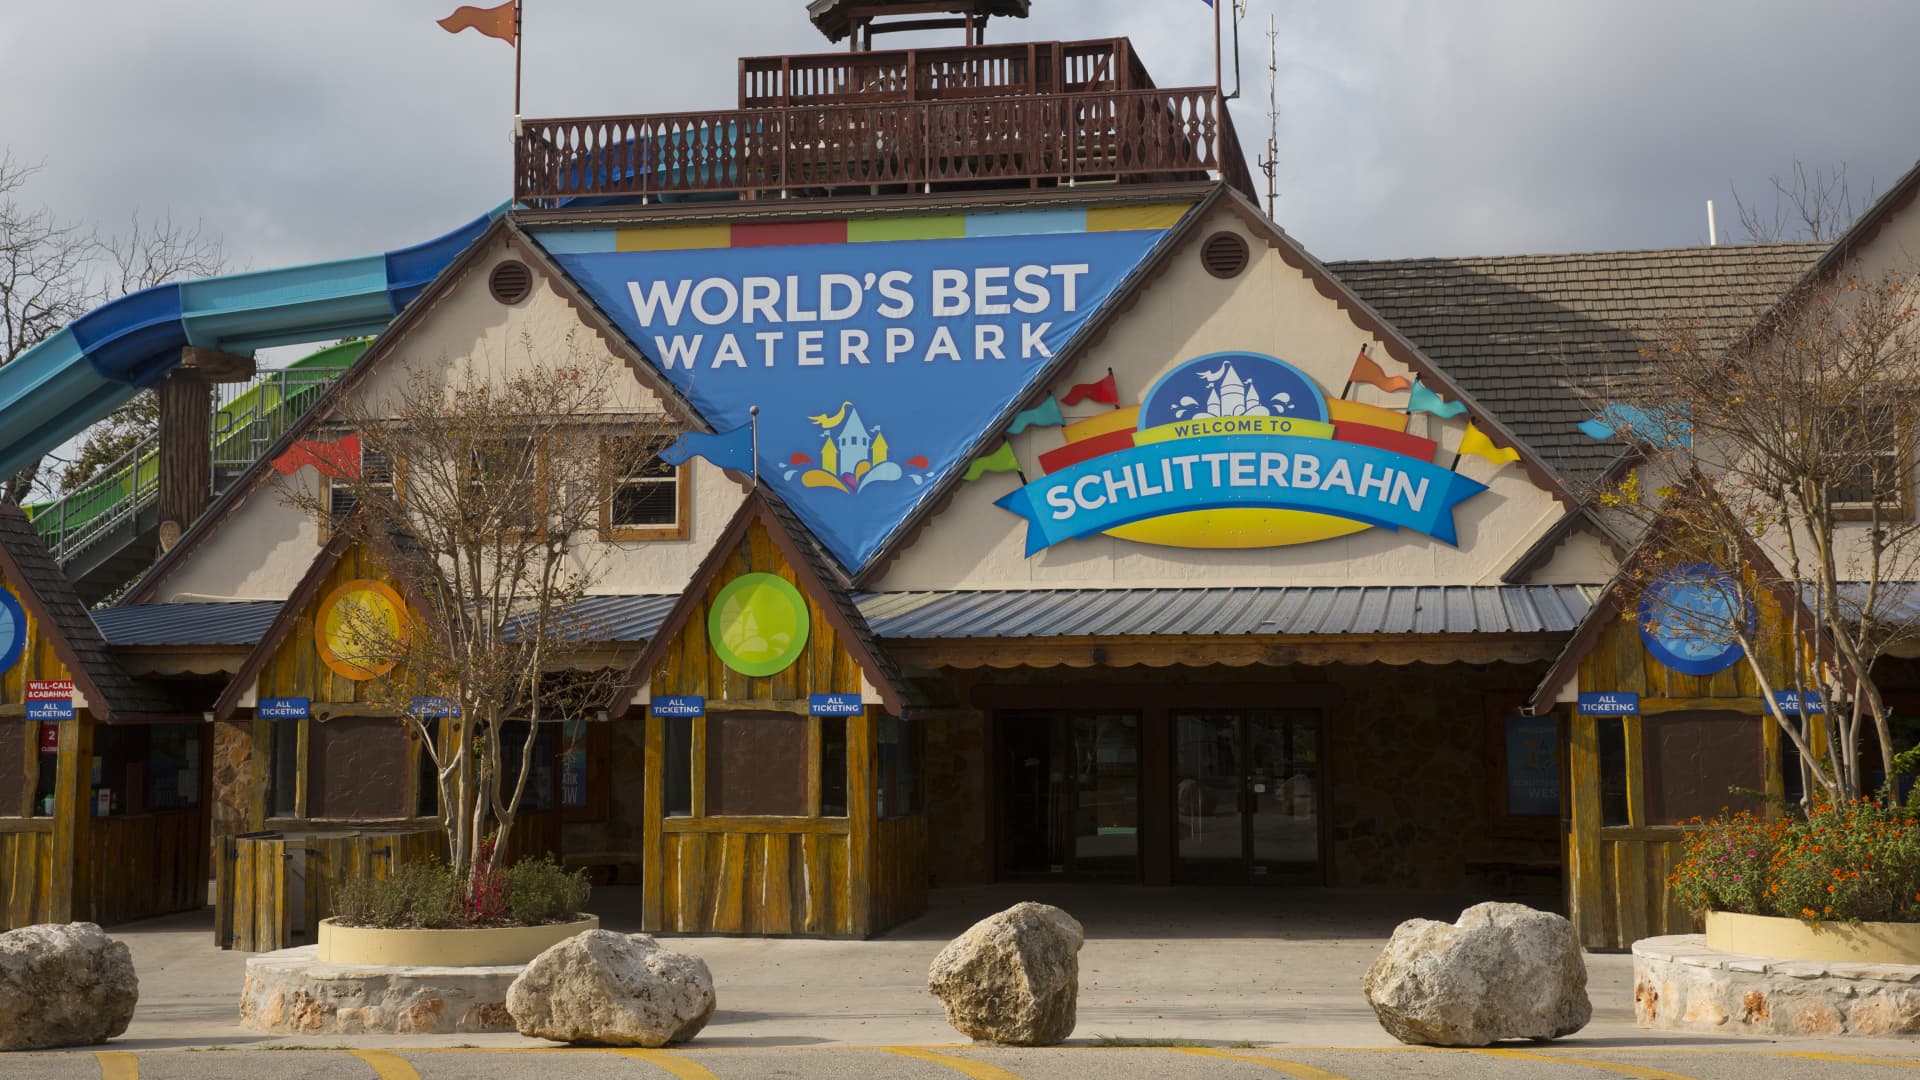 Schlitterbahn Waterpark and Resort in New Braunfels, Texas.